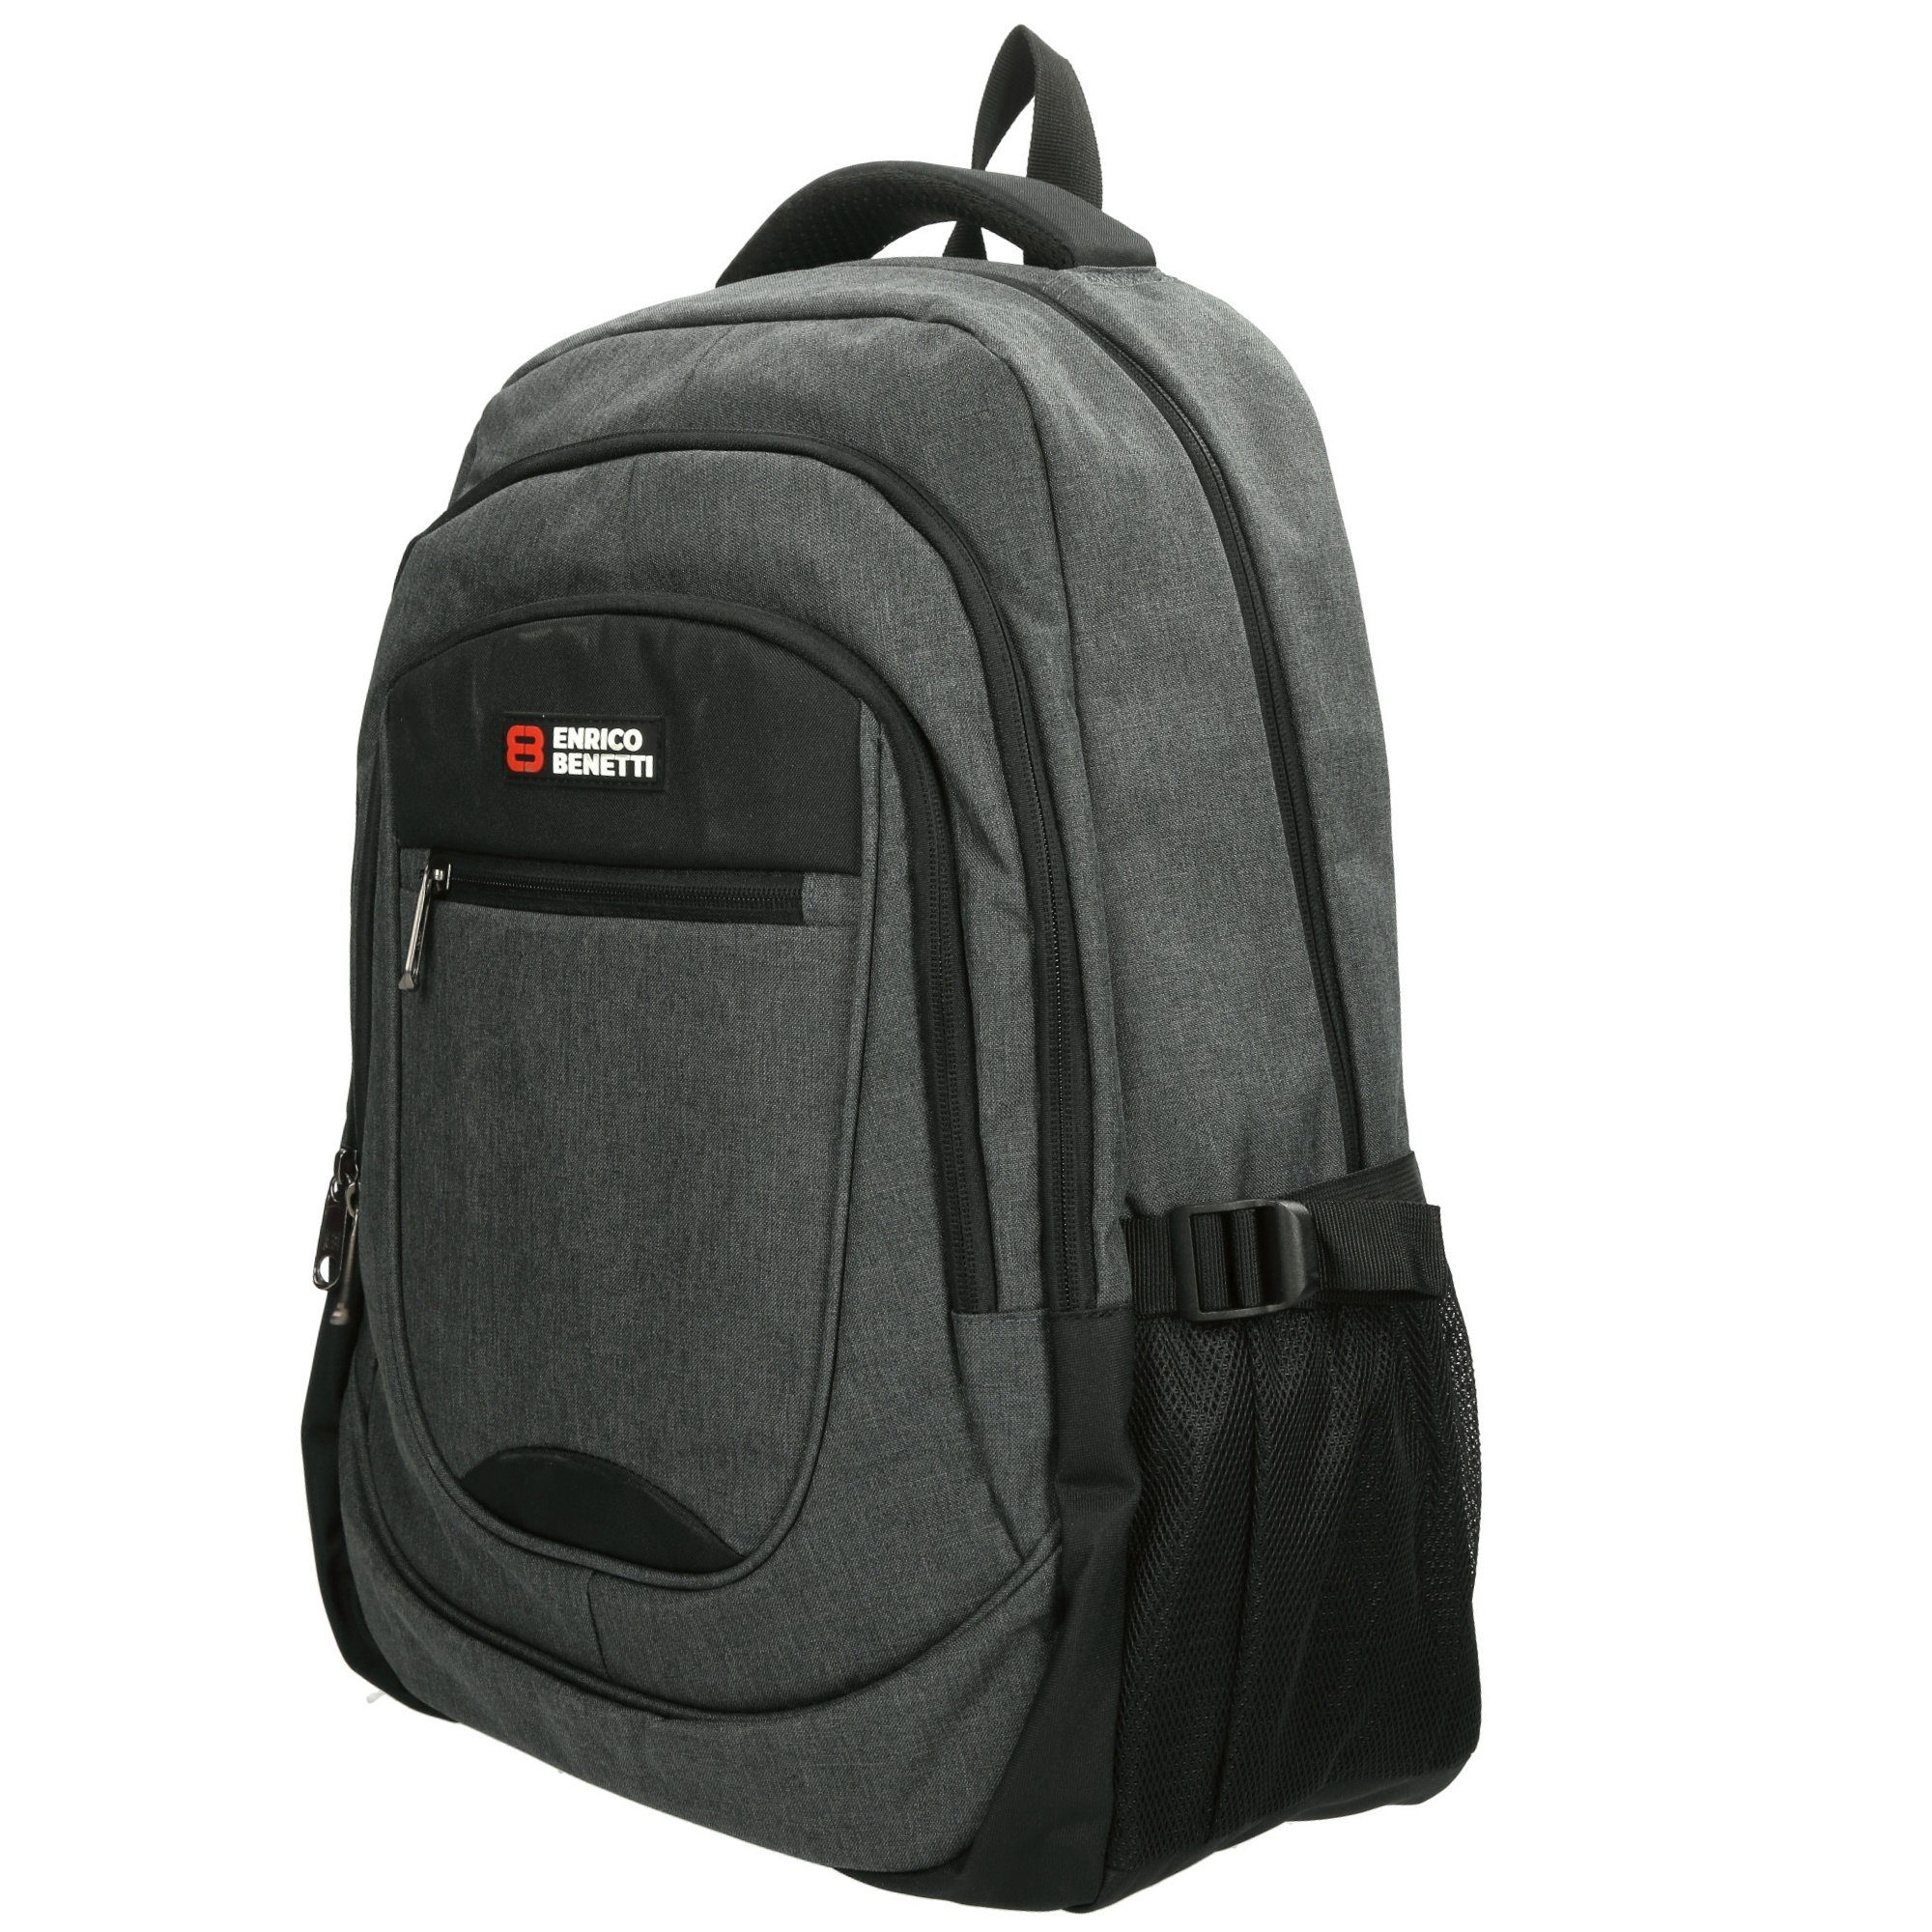 Laptoprucksack Backpack, Notebooktasche Grau HTI-Living Laptoprucksack